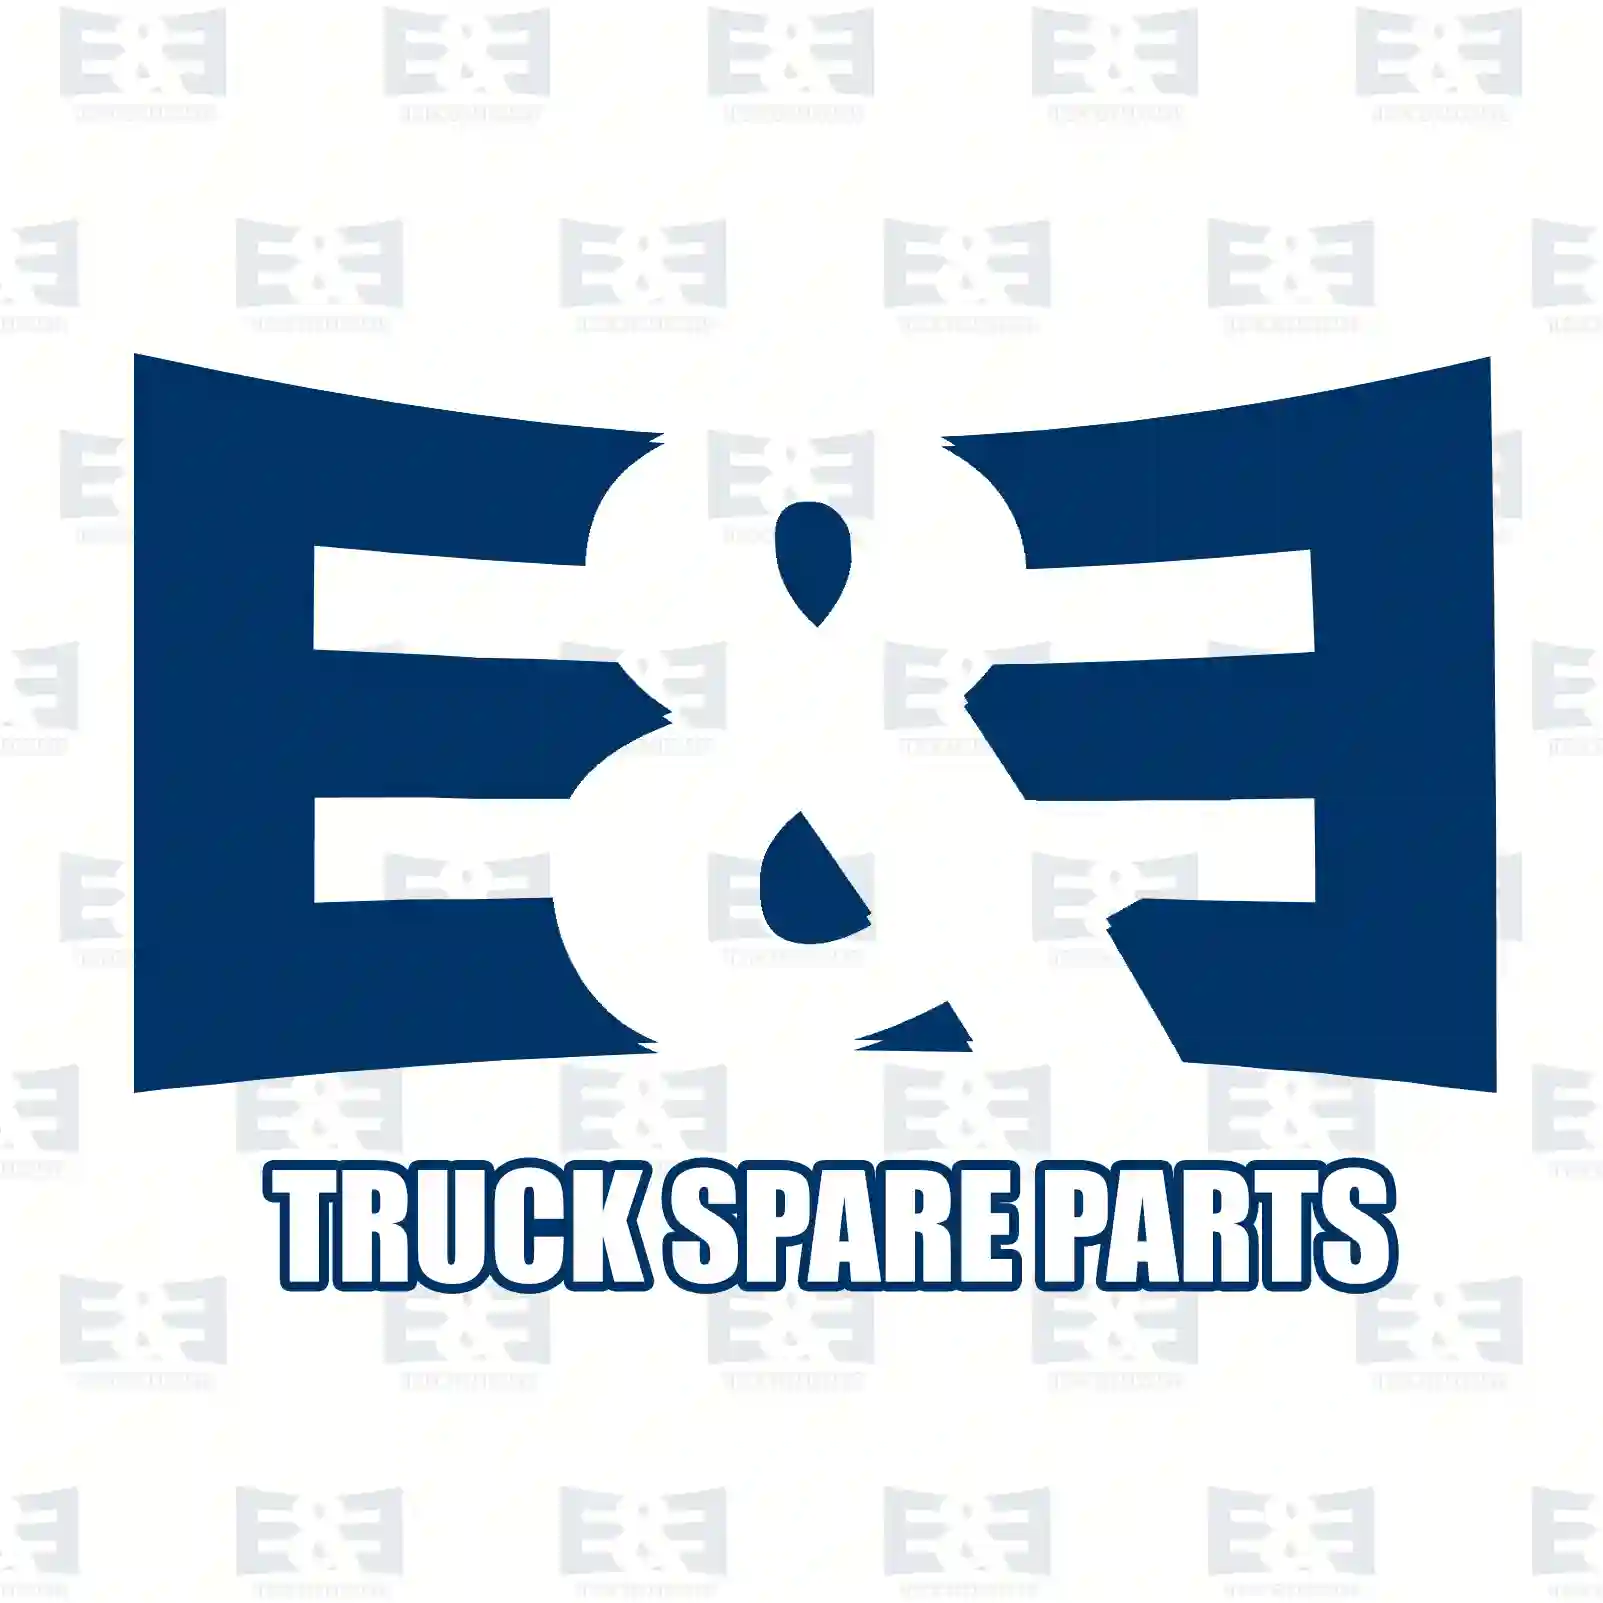 Buffer stop, shock absorber, 2E2283307, 1C15-4002-BA, 4346508 ||  2E2283307 E&E Truck Spare Parts | Truck Spare Parts, Auotomotive Spare Parts Buffer stop, shock absorber, 2E2283307, 1C15-4002-BA, 4346508 ||  2E2283307 E&E Truck Spare Parts | Truck Spare Parts, Auotomotive Spare Parts